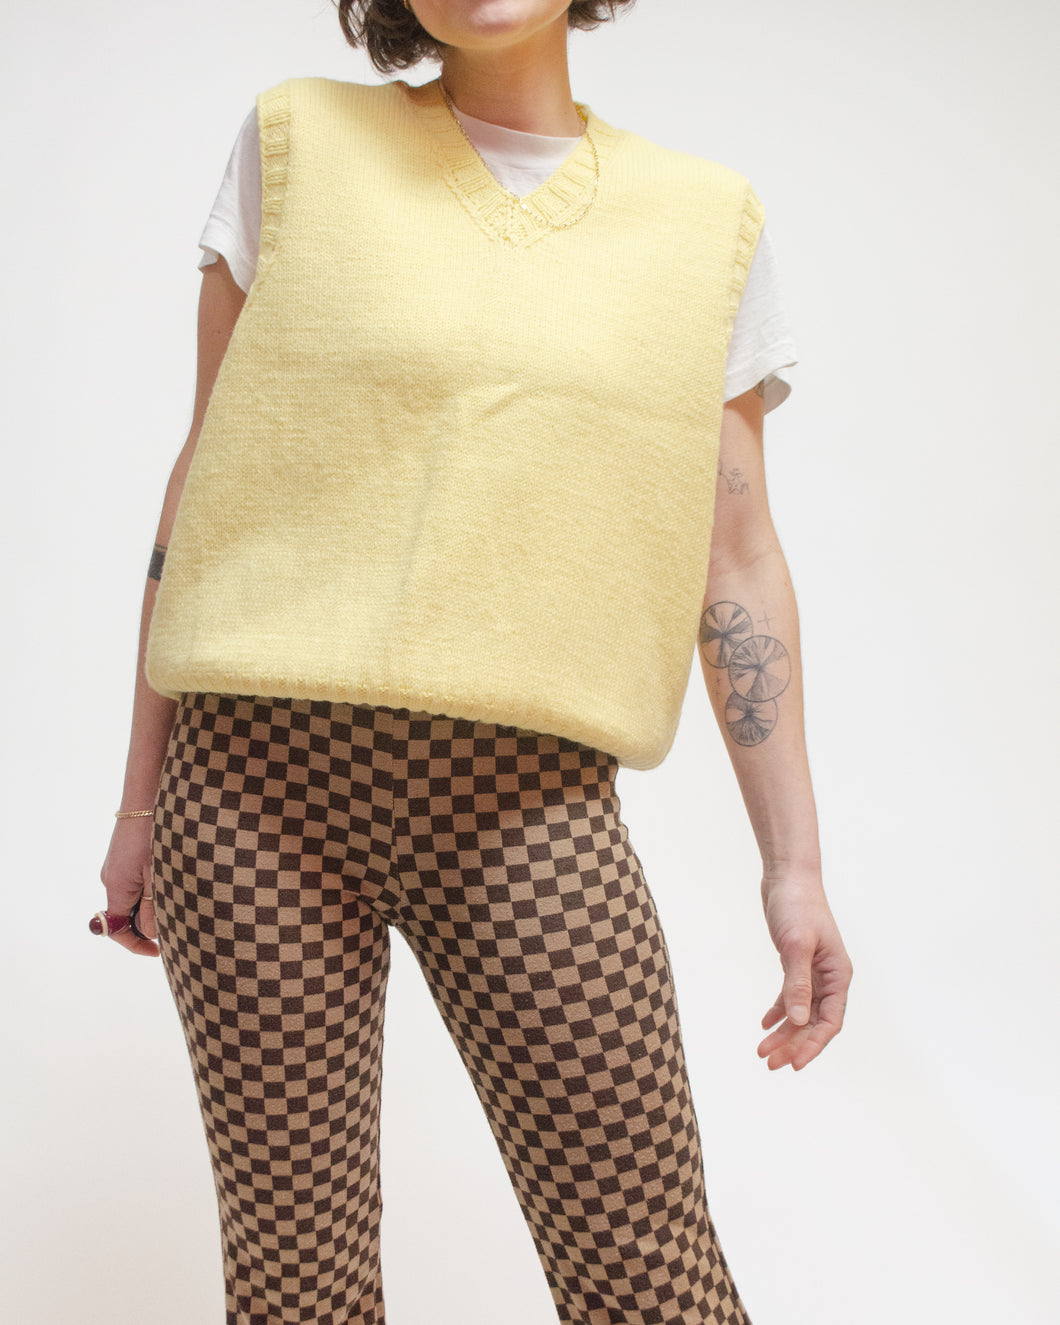 Yellow knit sweater vest